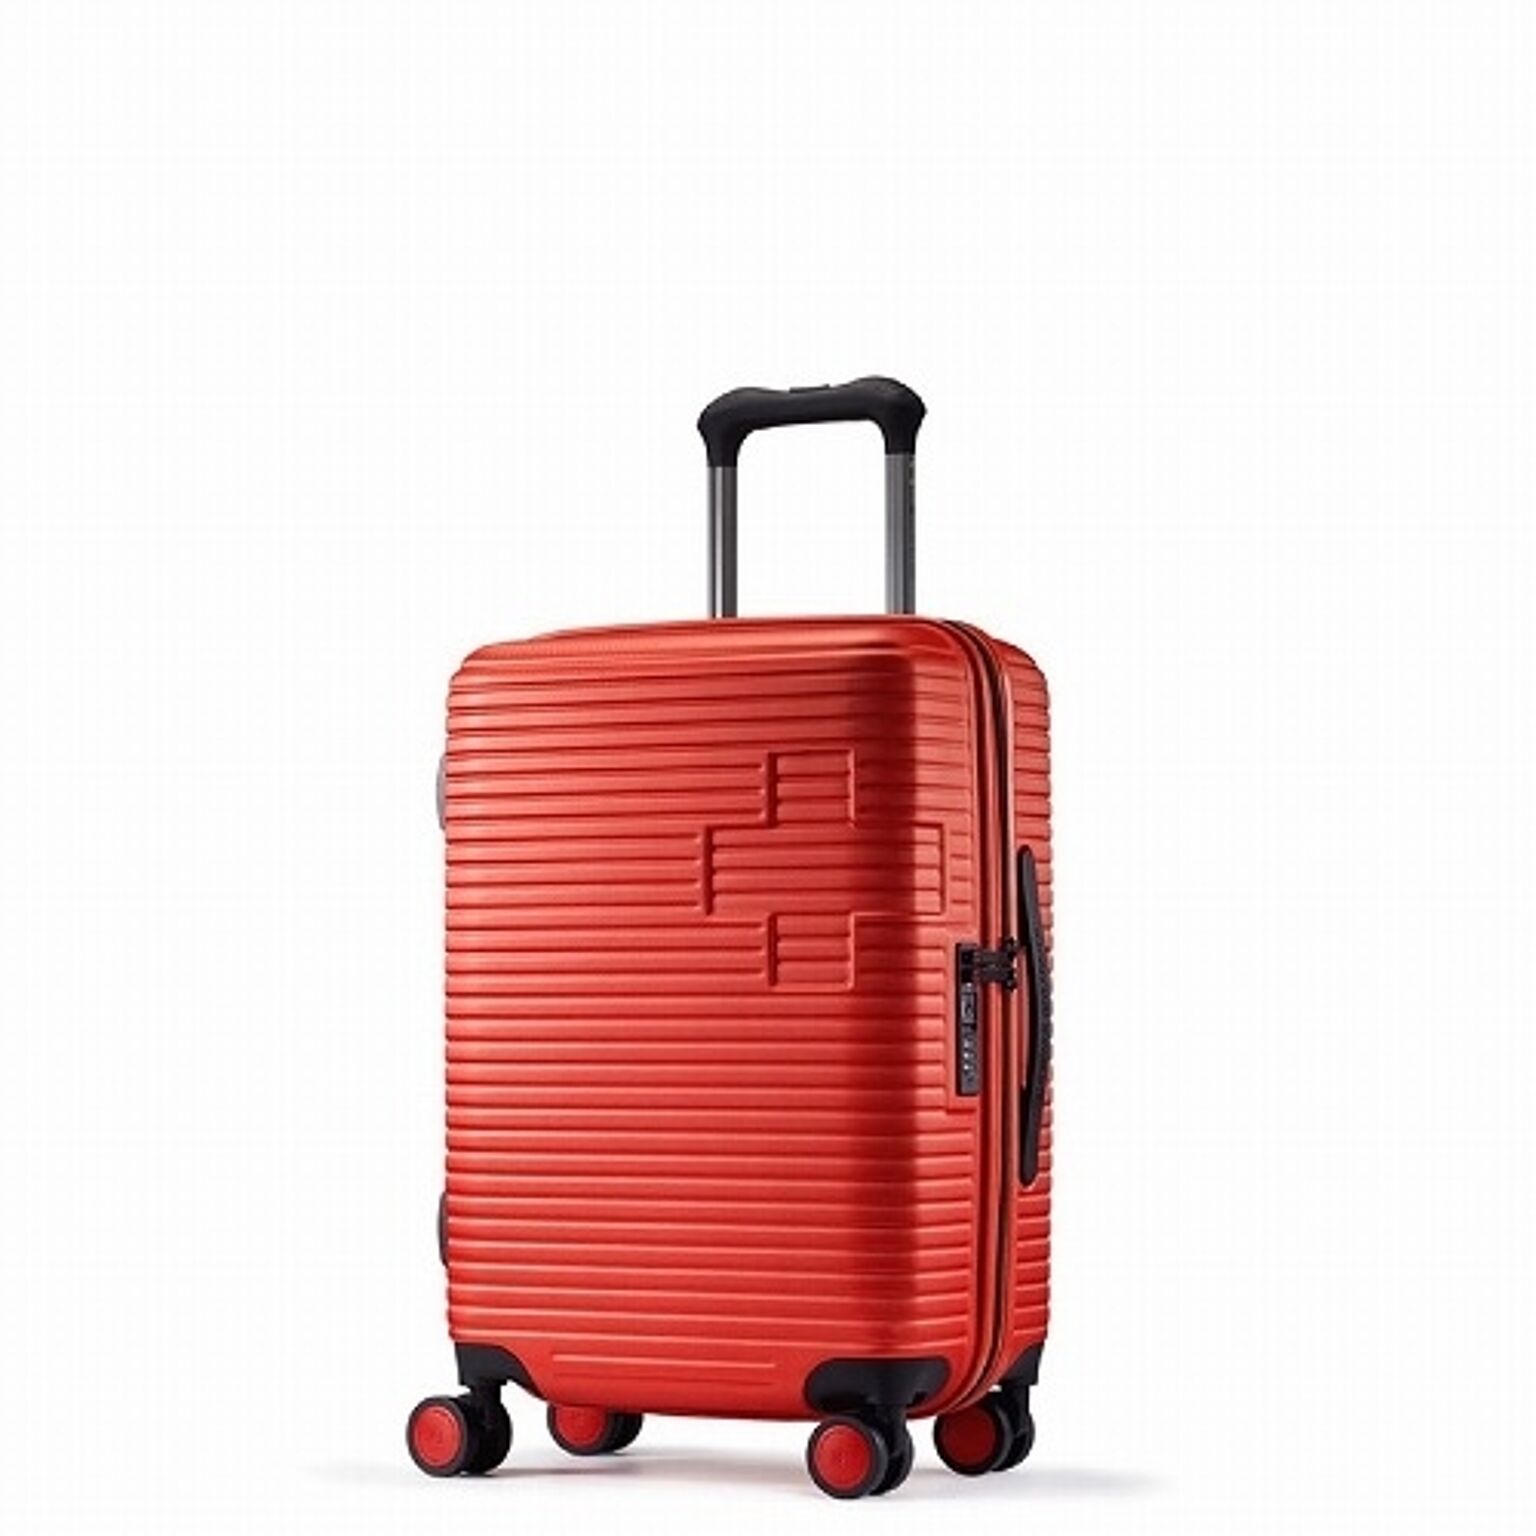 SWISS MILITARY COLORIS(コロリス) スーツケース SM-HB920-RED 54cm 機内持ち込み可/40L/TSAロック/ティンプティングレッド